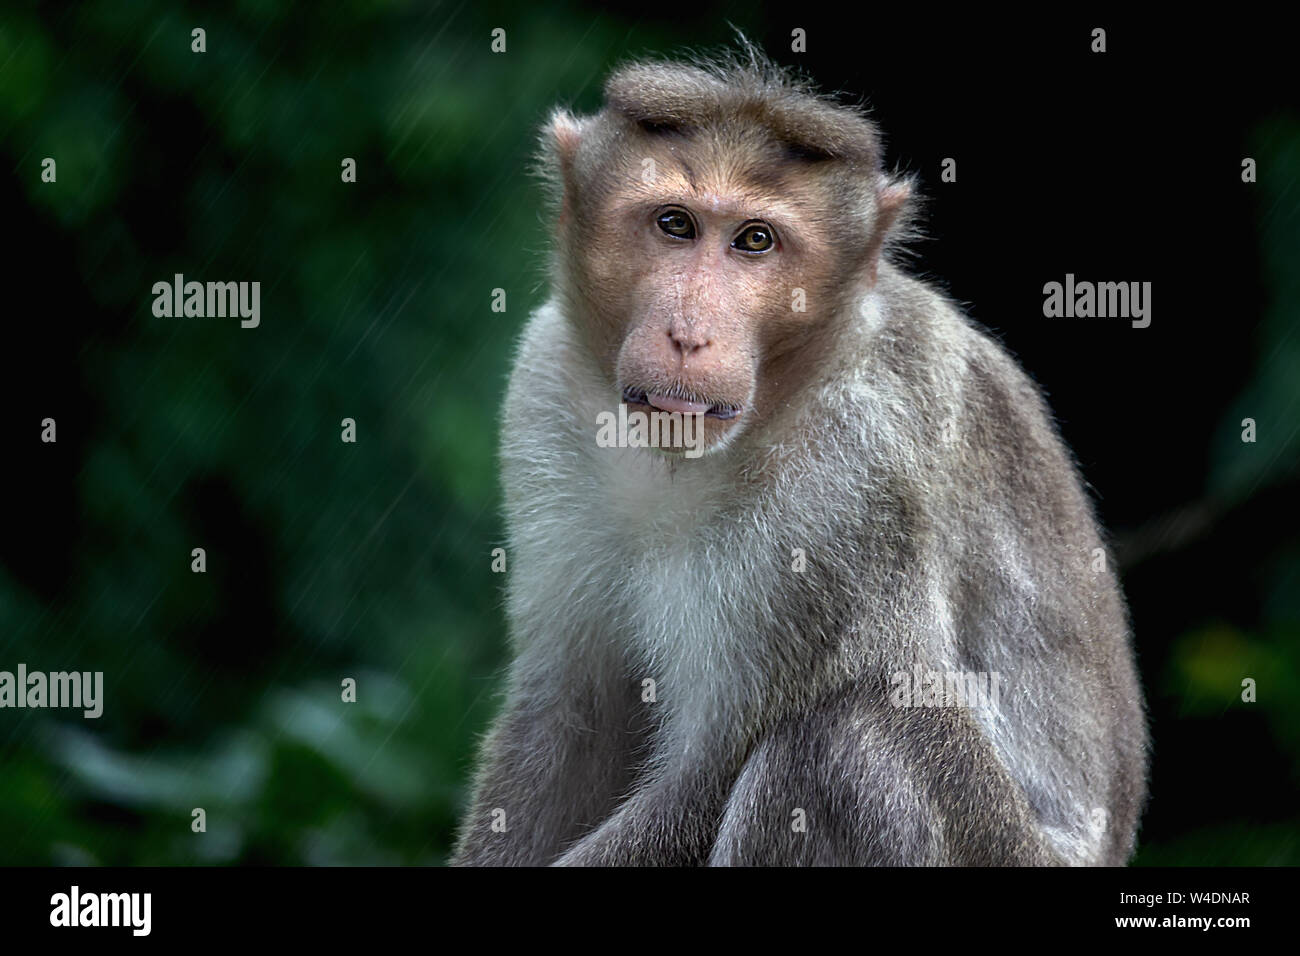 Monkey expression - Ooty Tamilnadu India Stock Photo